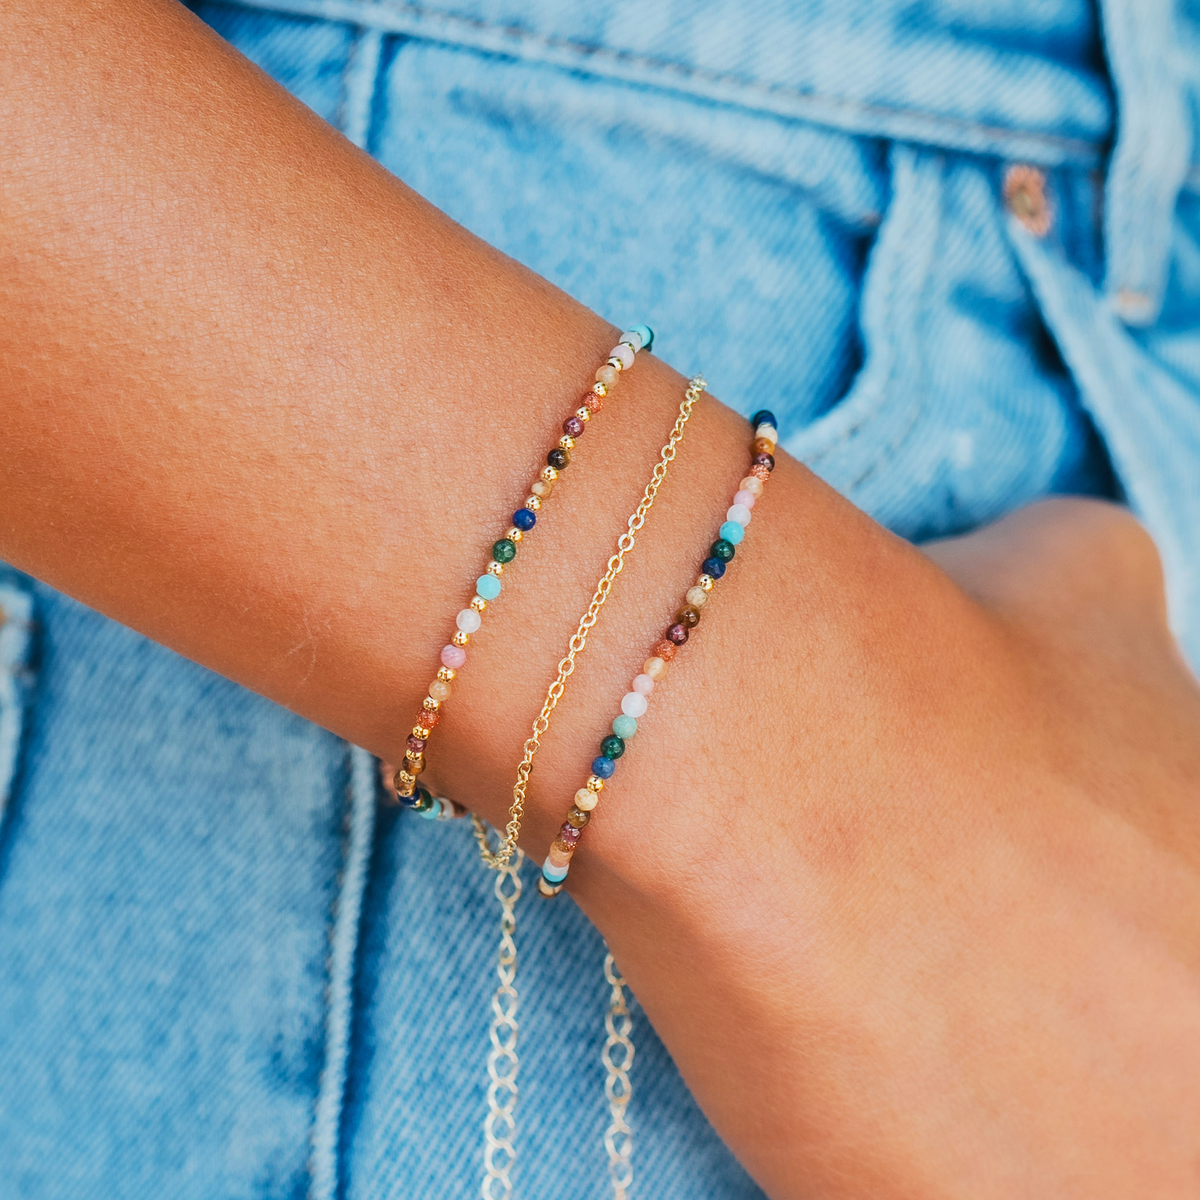 Model wearing a healing bracelet stack. The bracelets consist of a 2mm multicolor stone and gold bead healing bracelet and a 2mm multicolor stone healing bracelet.